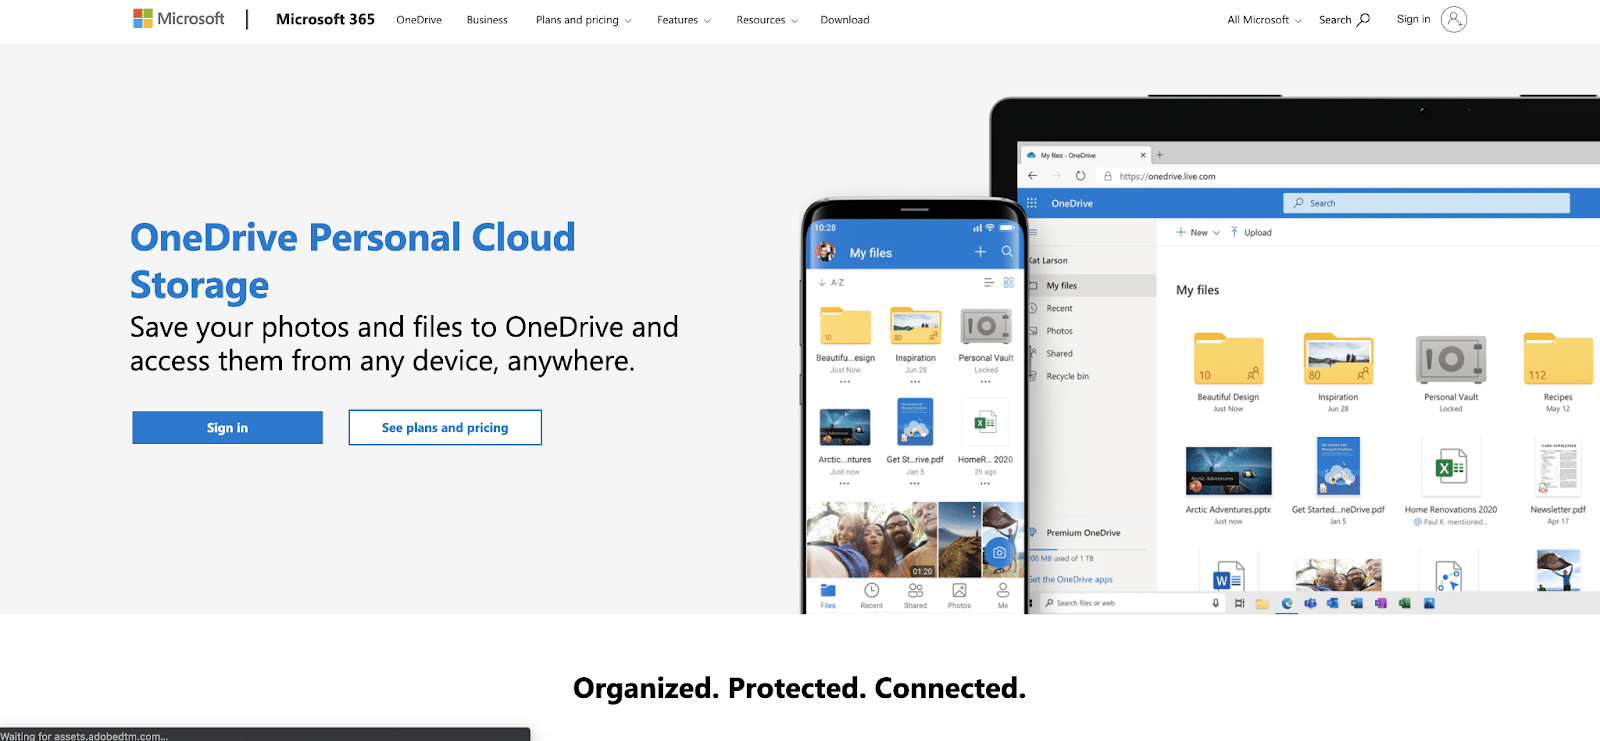 Microsoft OneDrive website homepage